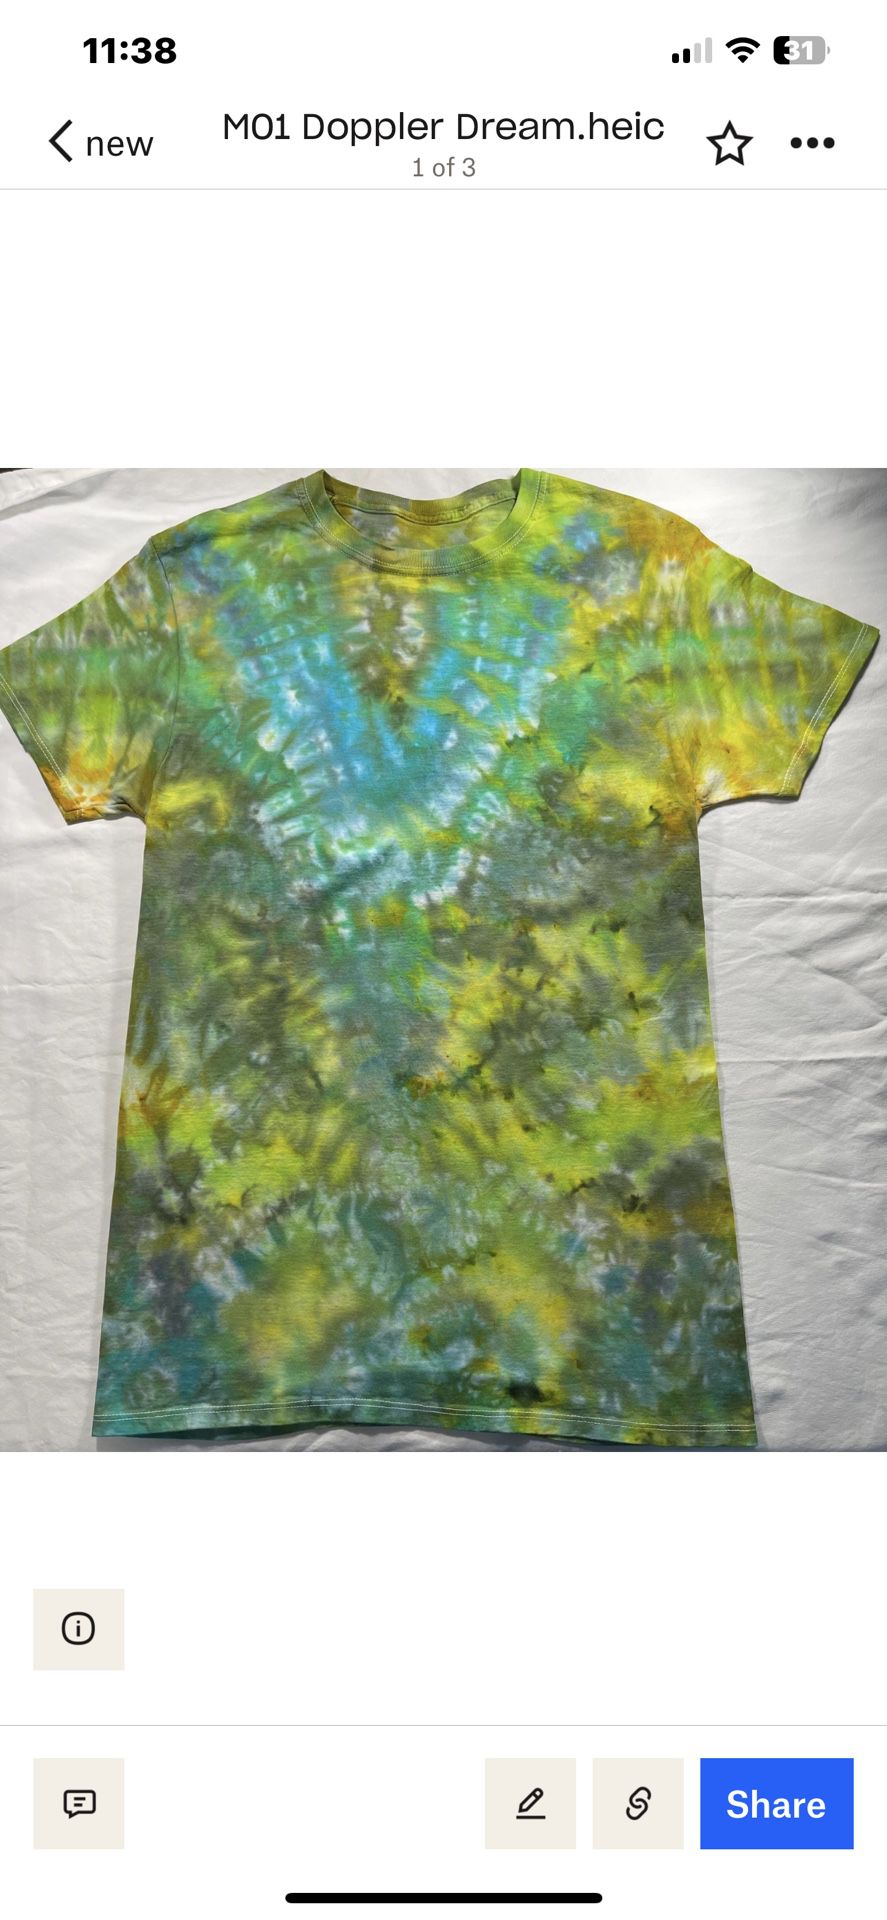 M01 NEW! Doppler Dream tie dye shirts